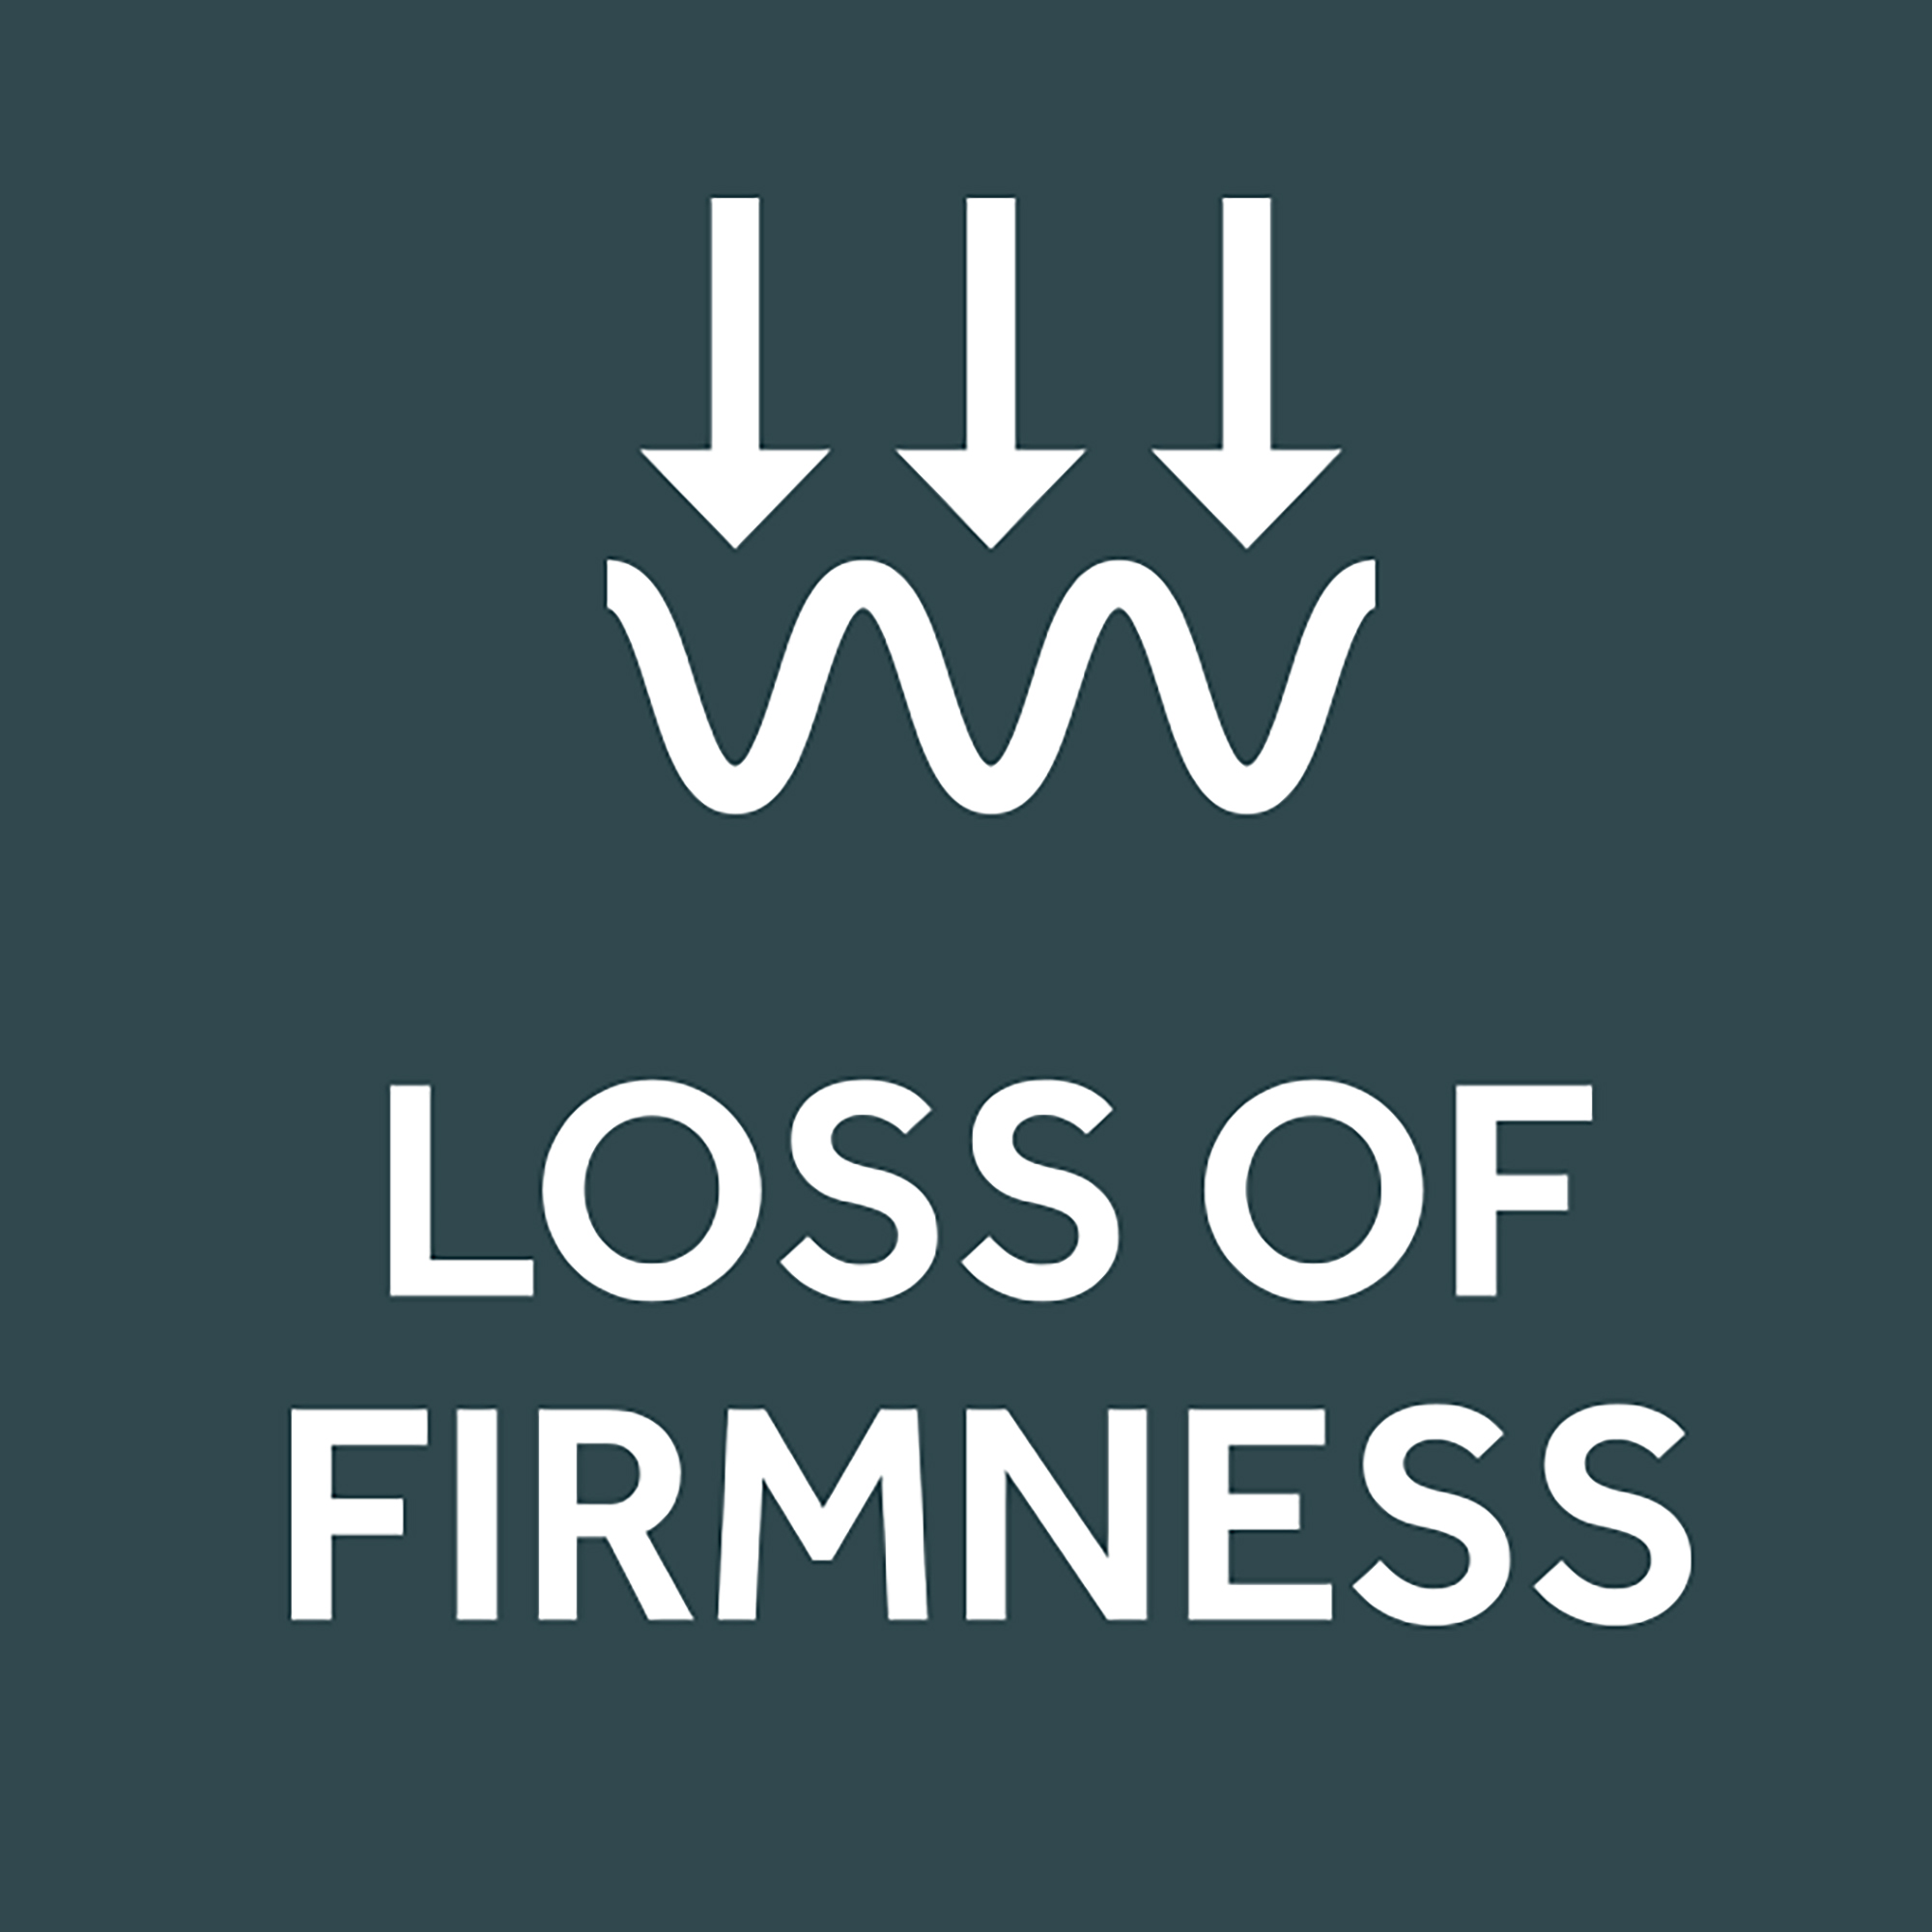 Loss of firmness.